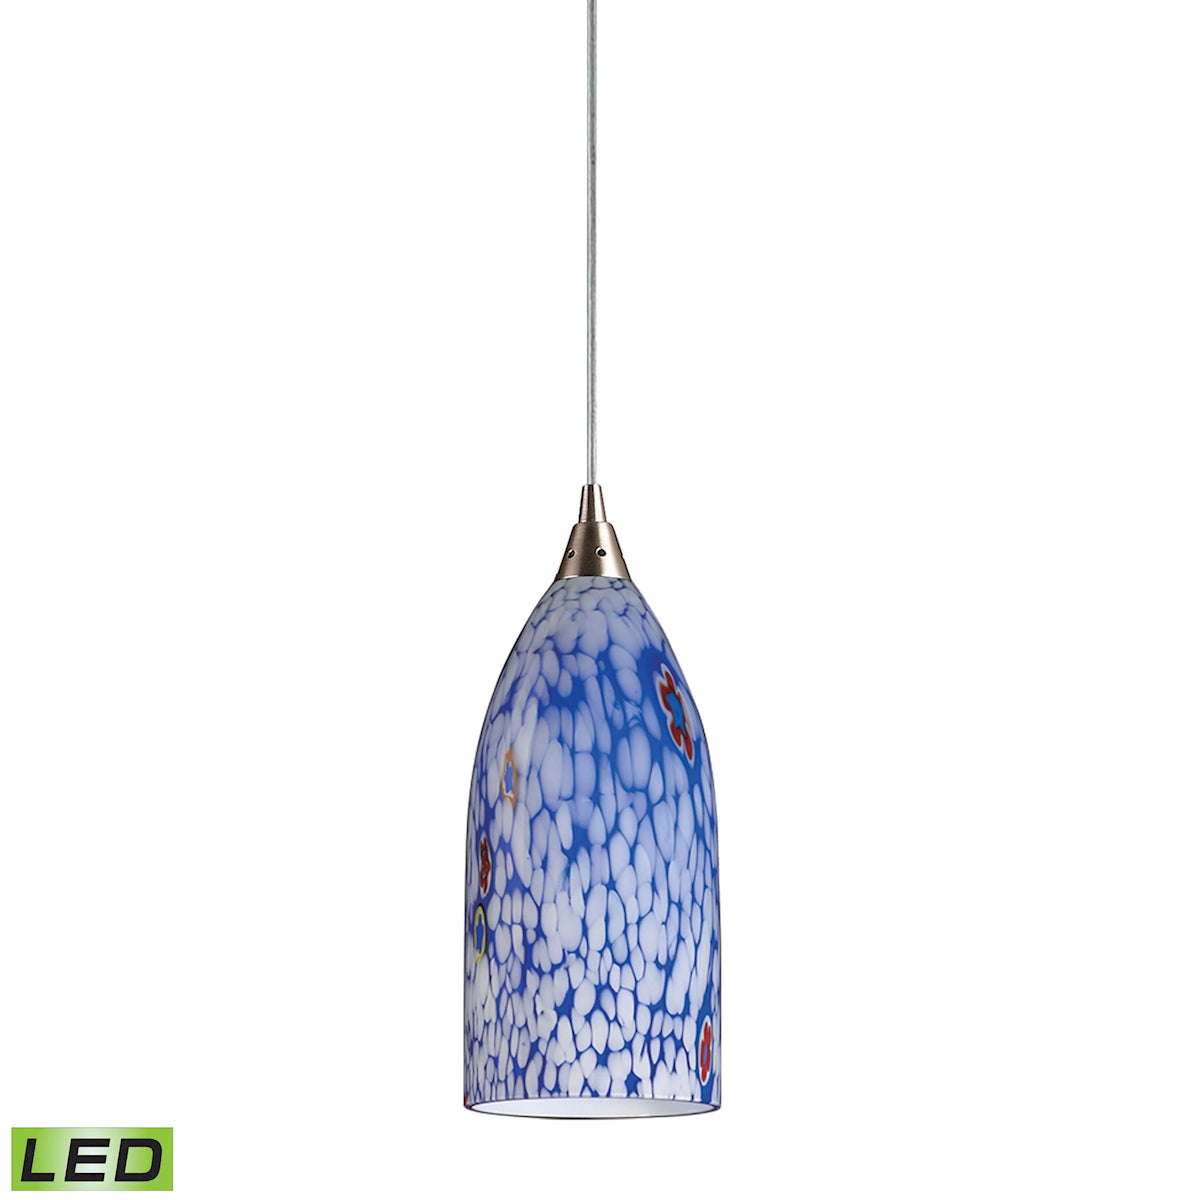 ELK Lighting 502-1BL-LED Verona 1-Light Mini Pendant in Satin Nickel with Starburst Blue Glass - Includes LED Bulb